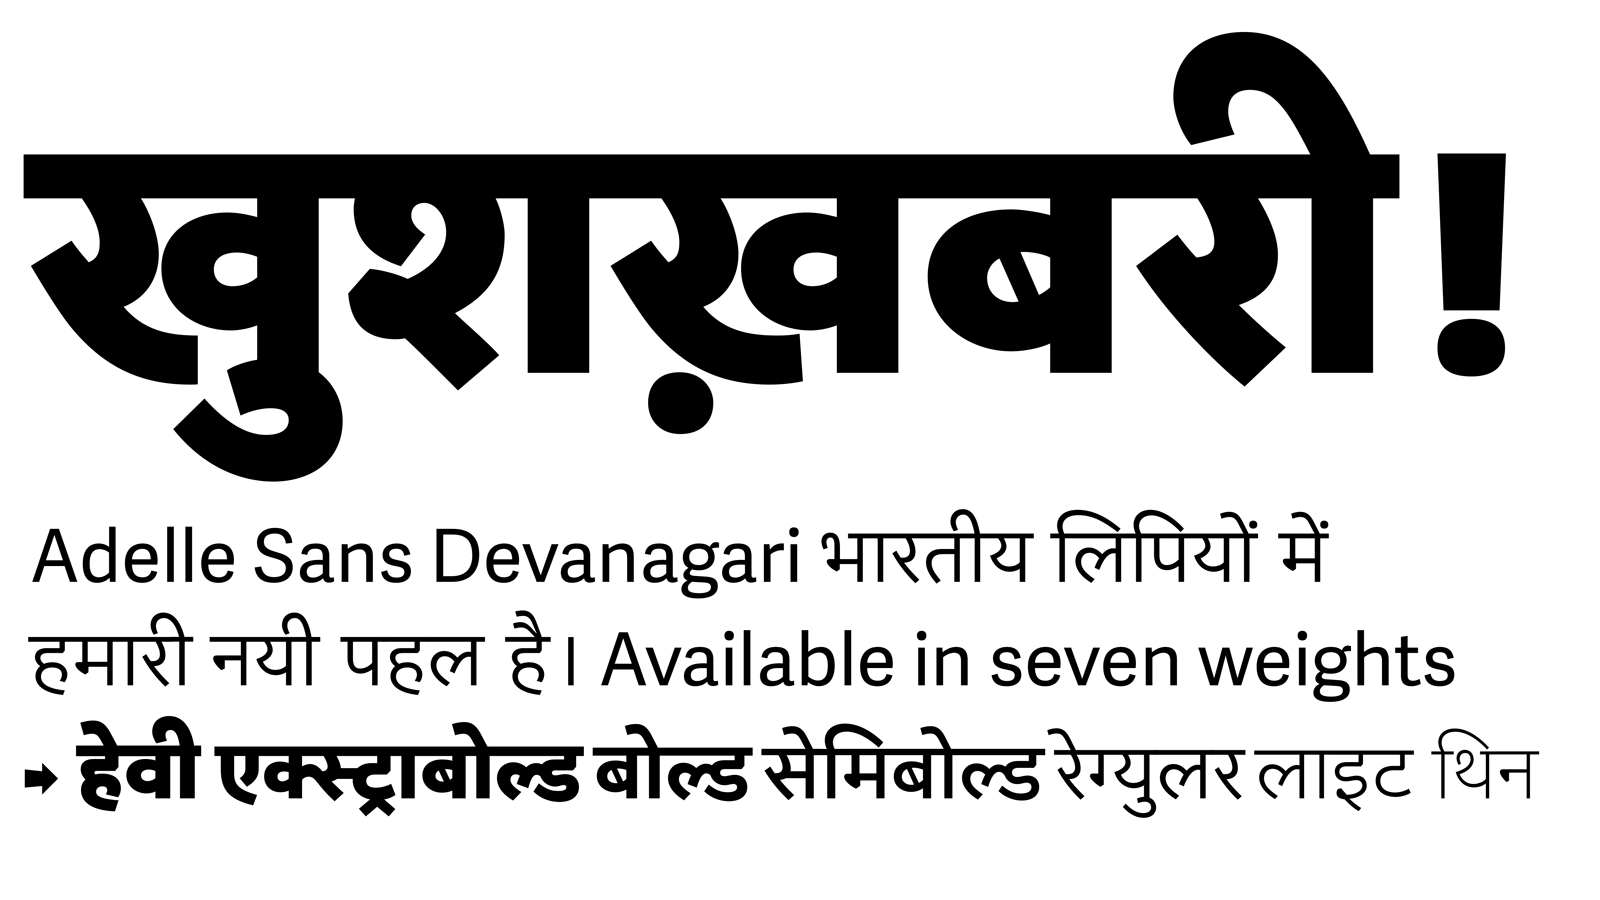 New release: Adelle Sans Devanagari